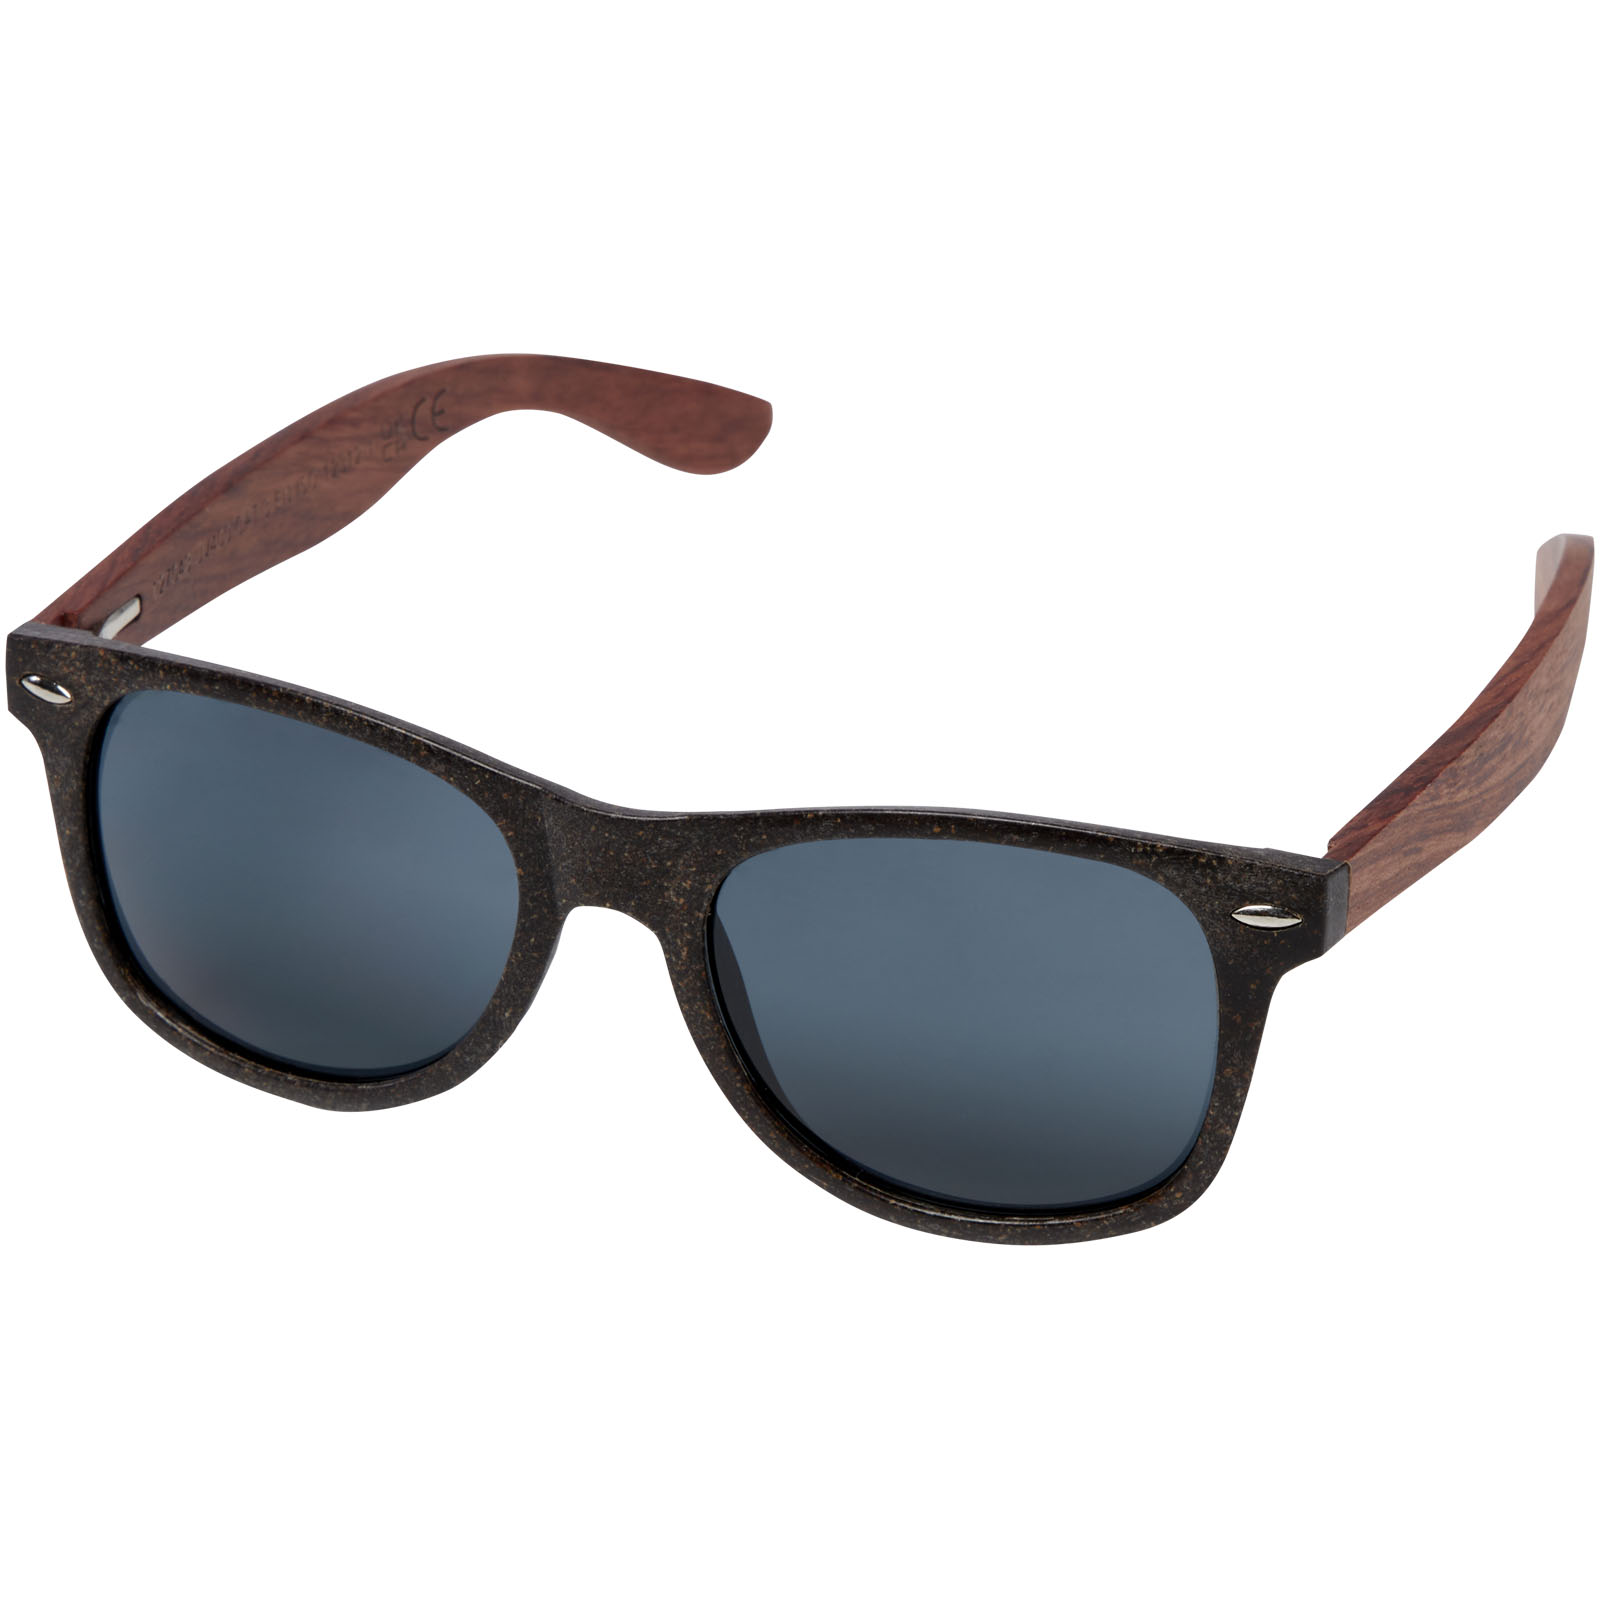 Sports & Leisure - Kafo sunglasses